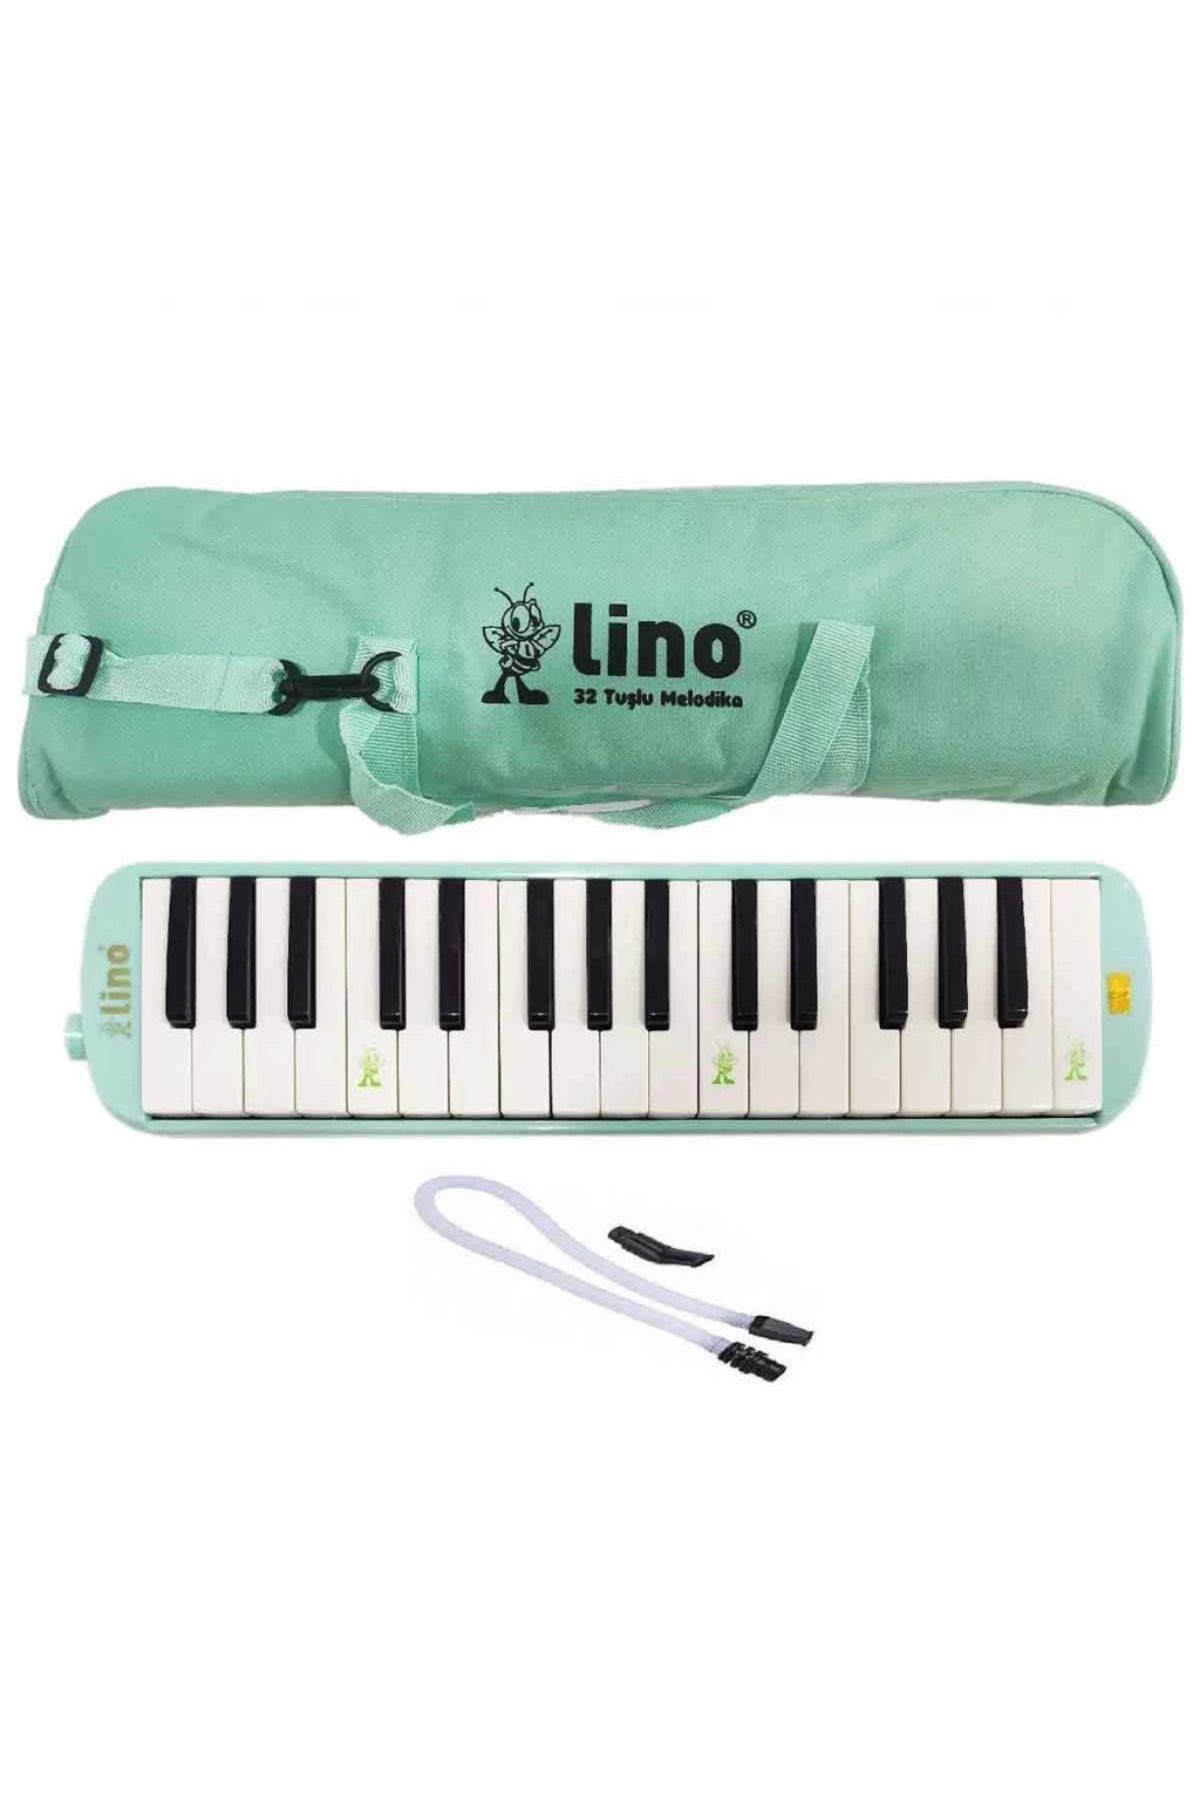 NessiWorld Lino 32 Tuşlu Bez Çantalı Melodika Pastel Yeşil